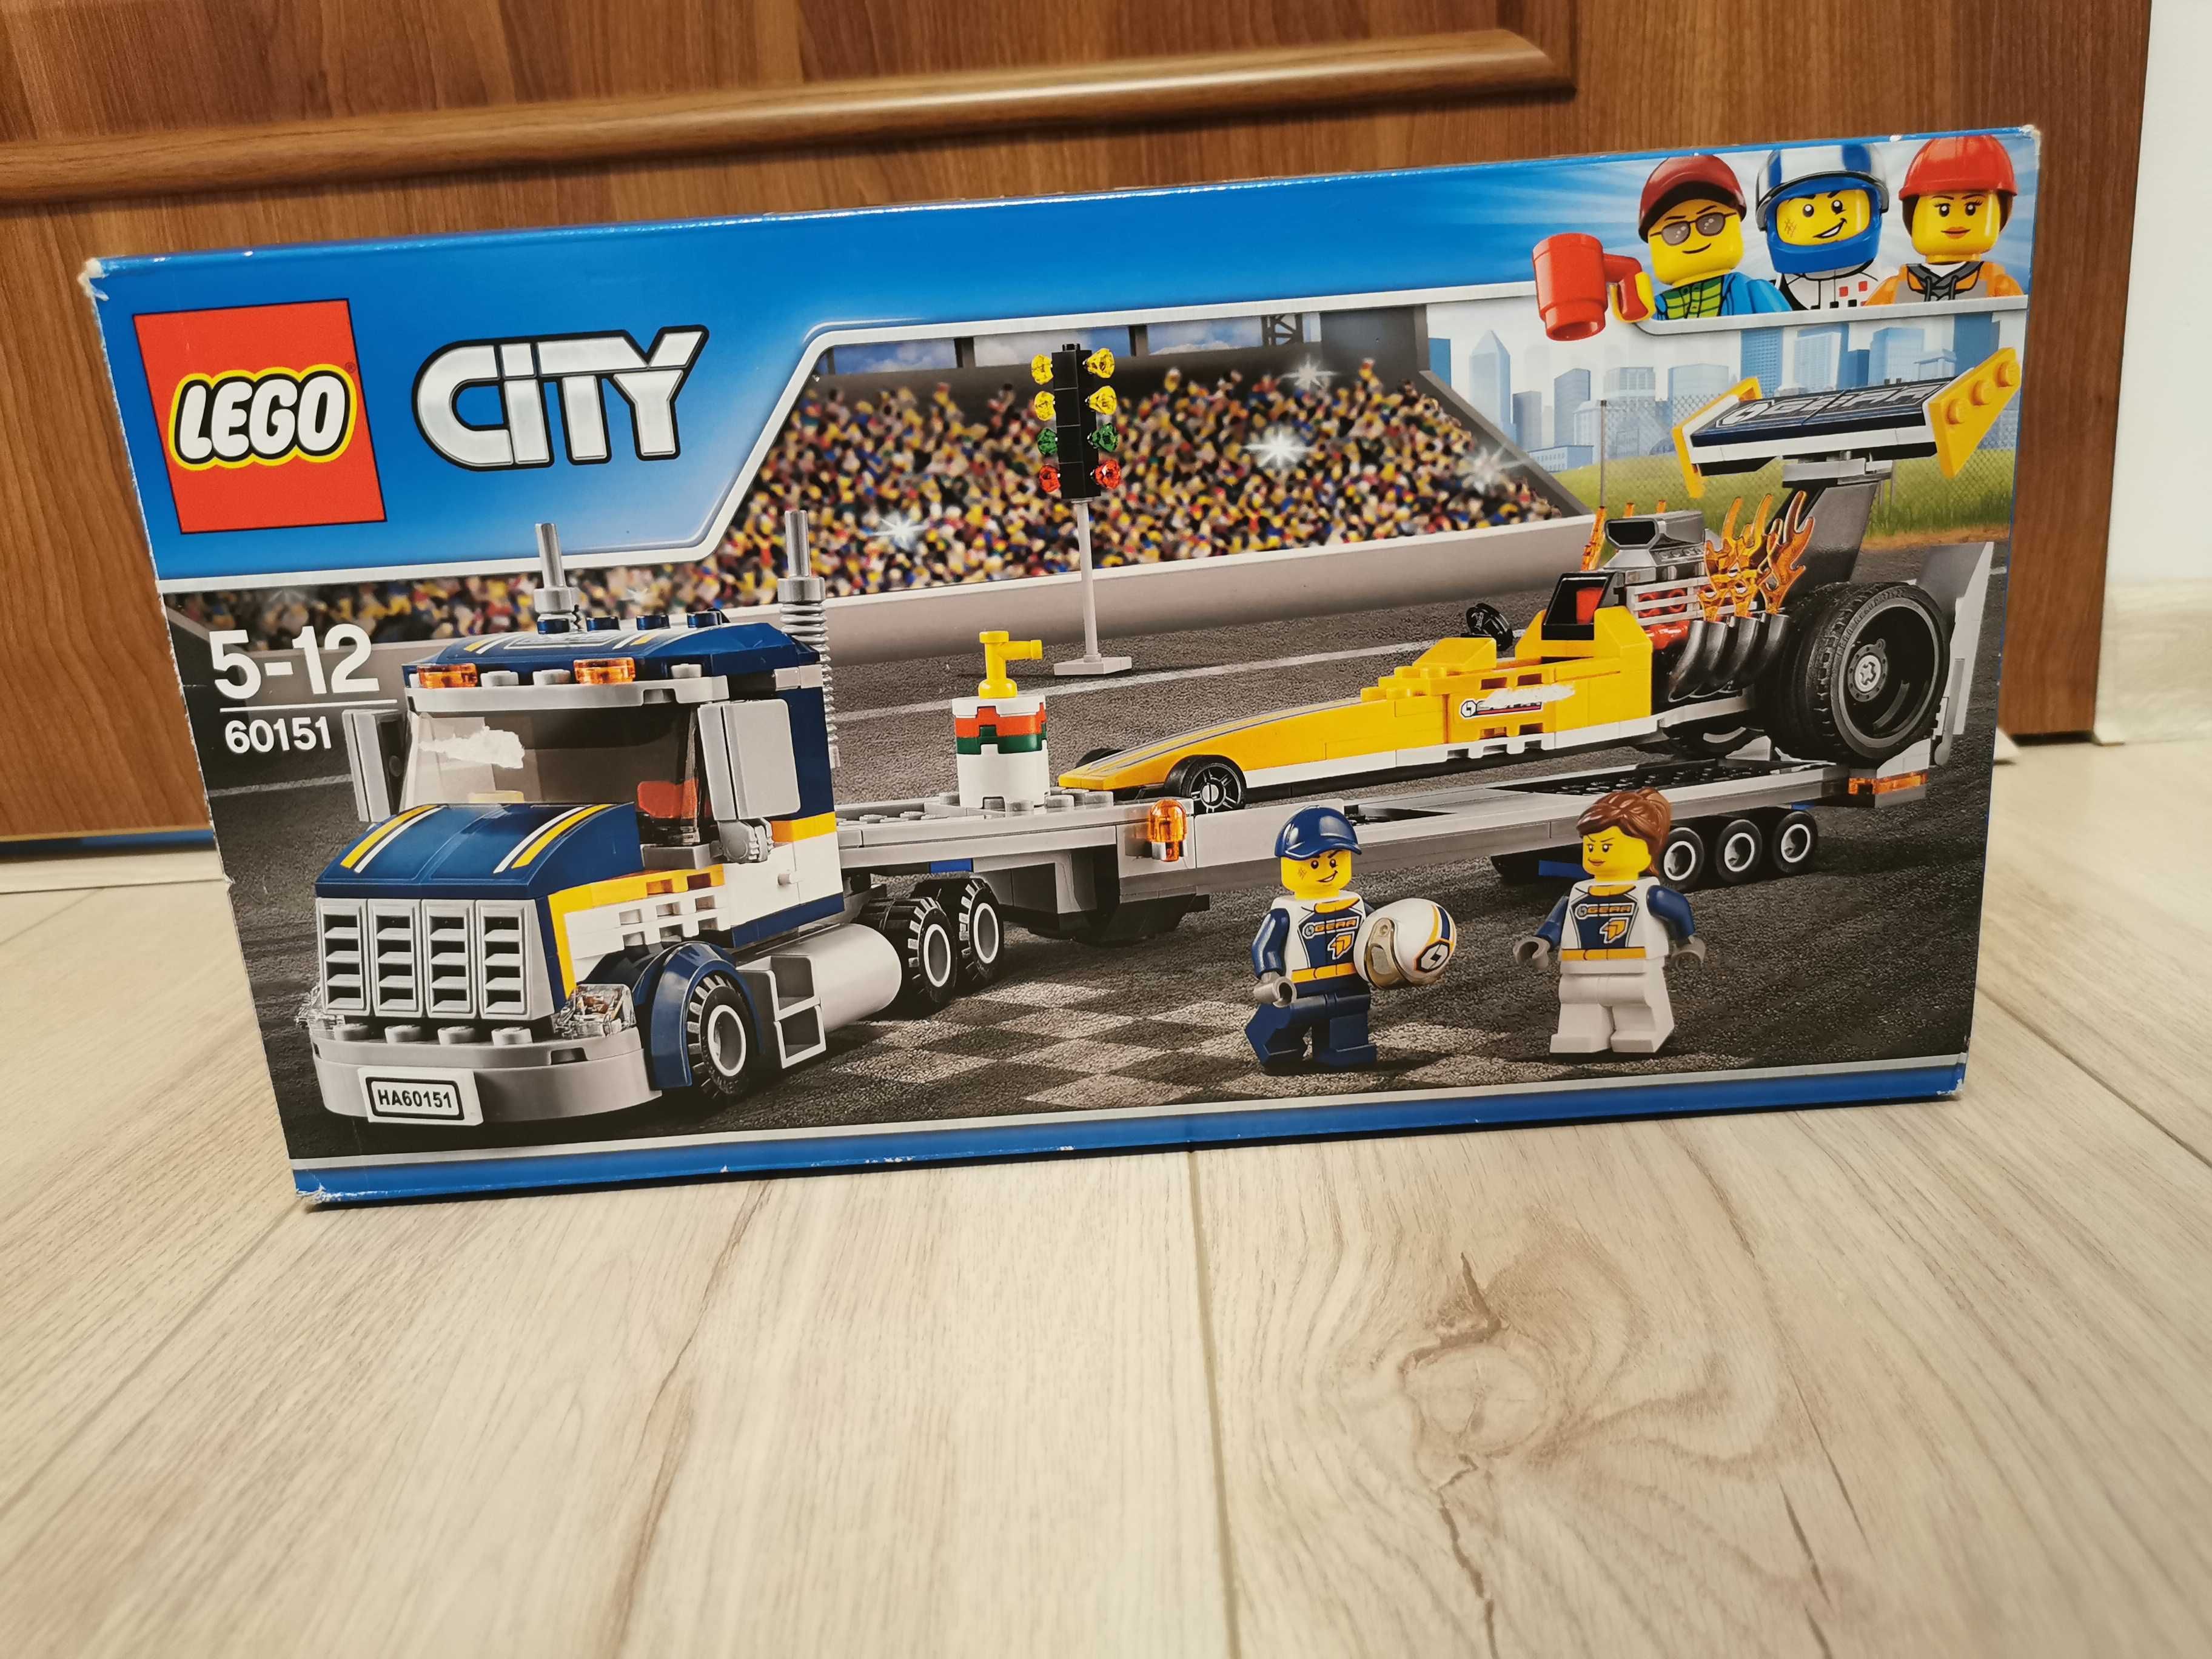 Vand Lego City 60151, in stare impecabila.